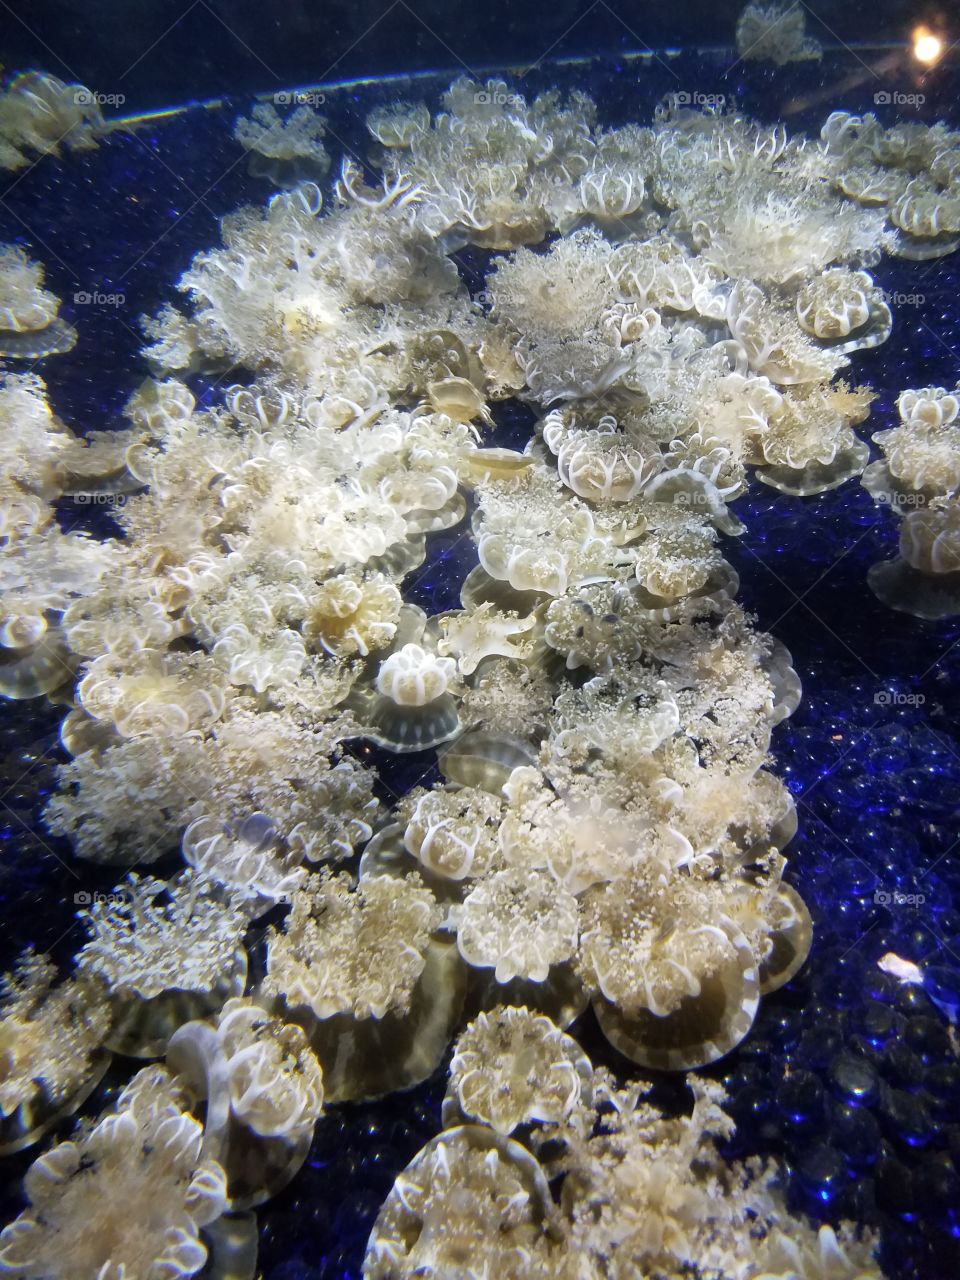 Upside Down Jellyfish at Tennessee Aquarium